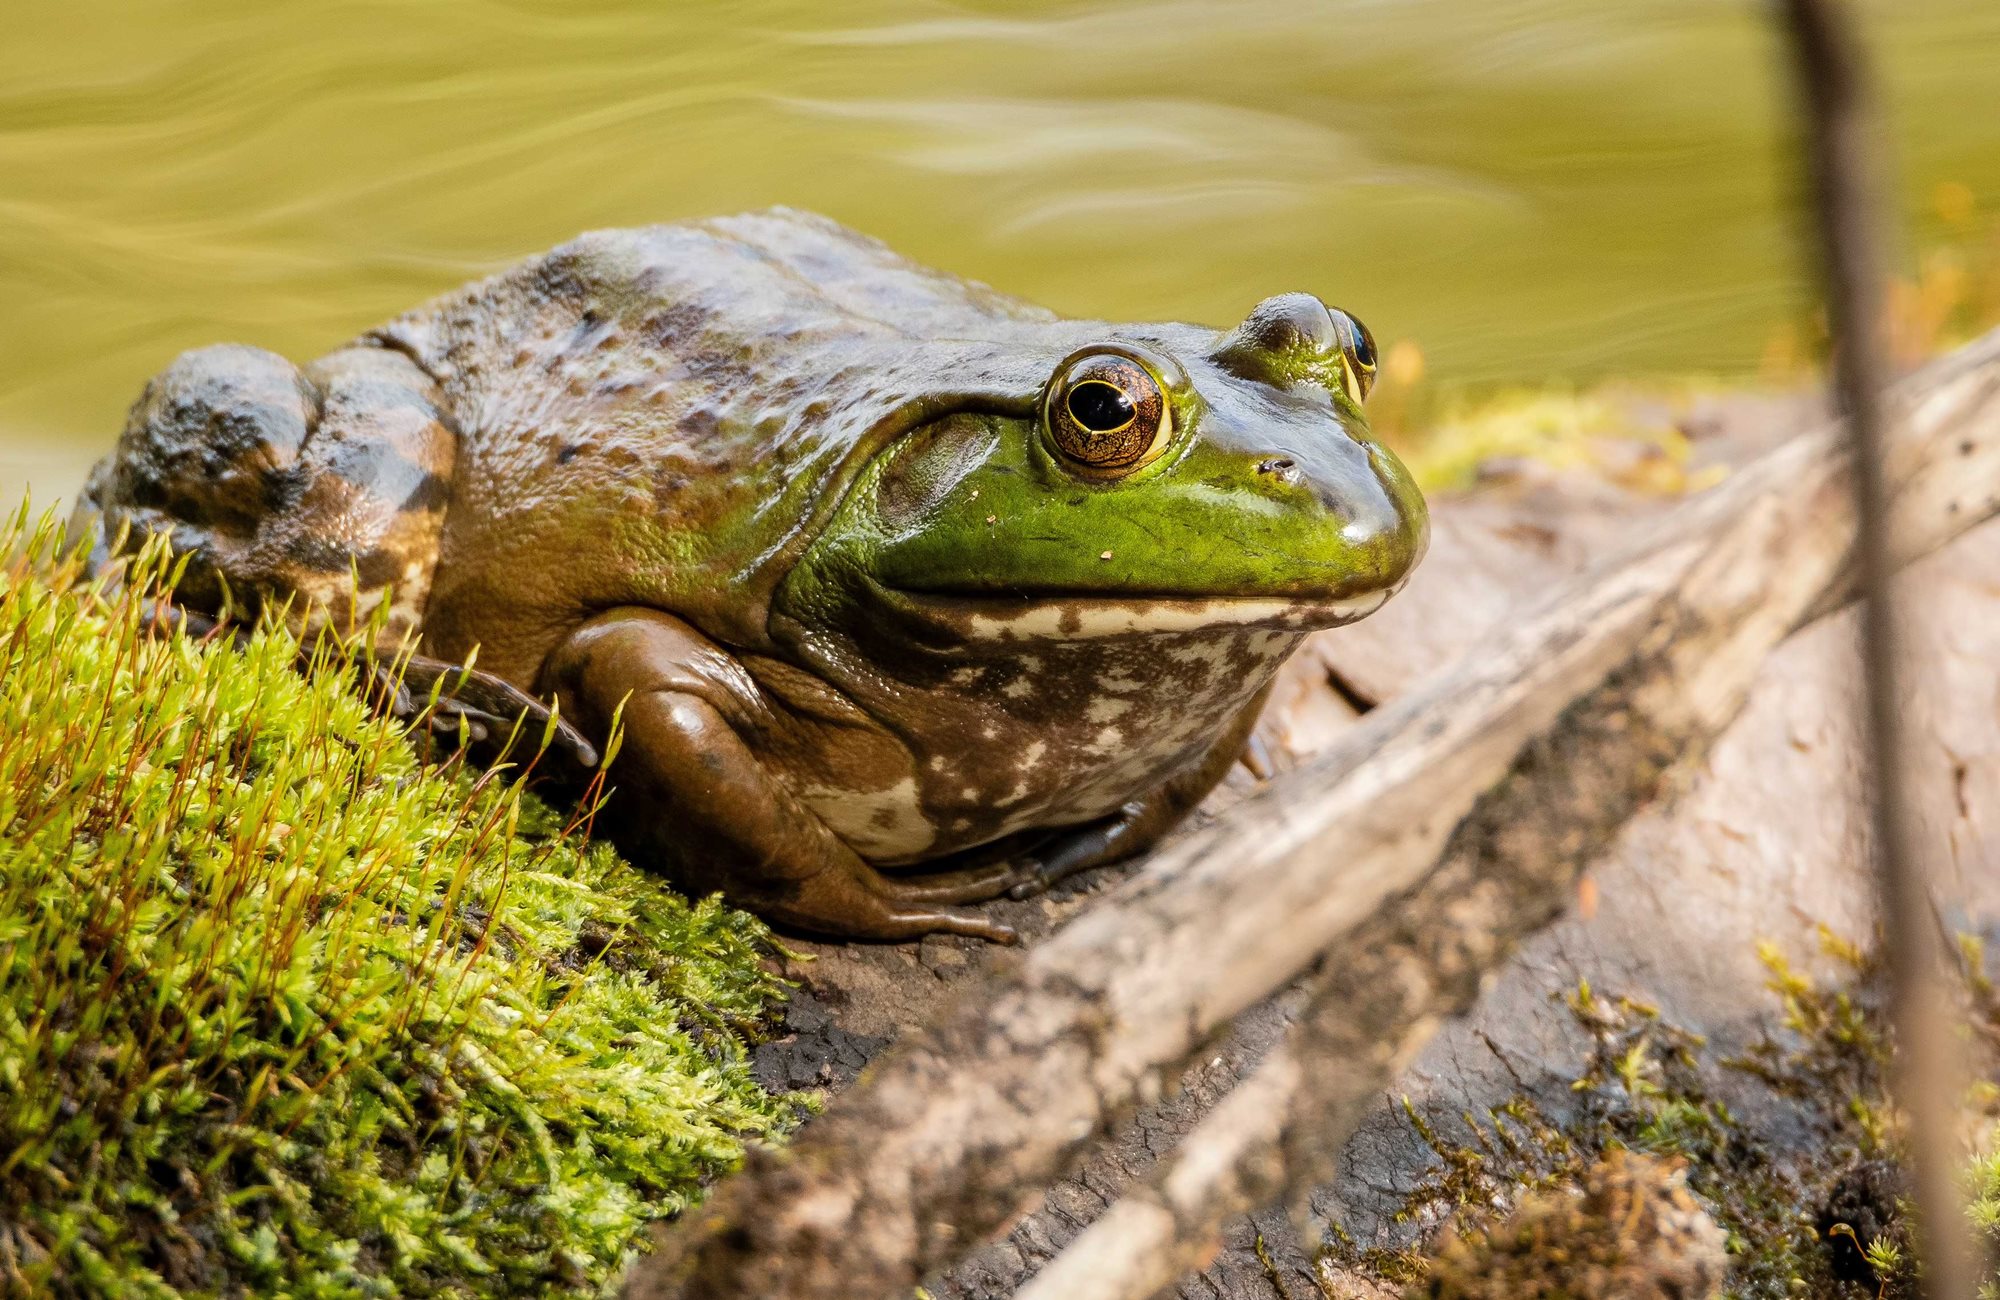 A frog sitting on a log.